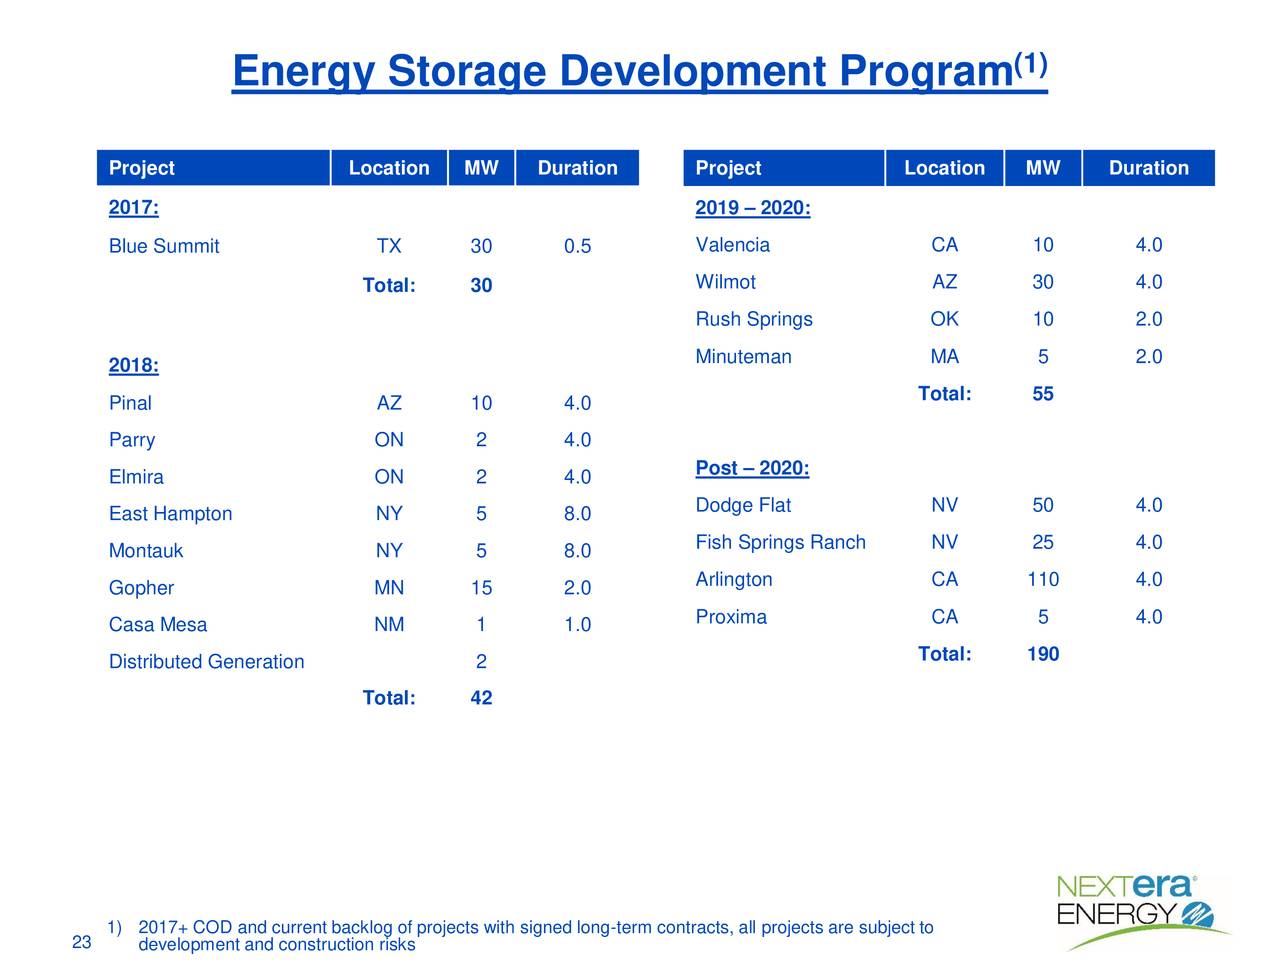 Energy Storage Development Program                                          (1)